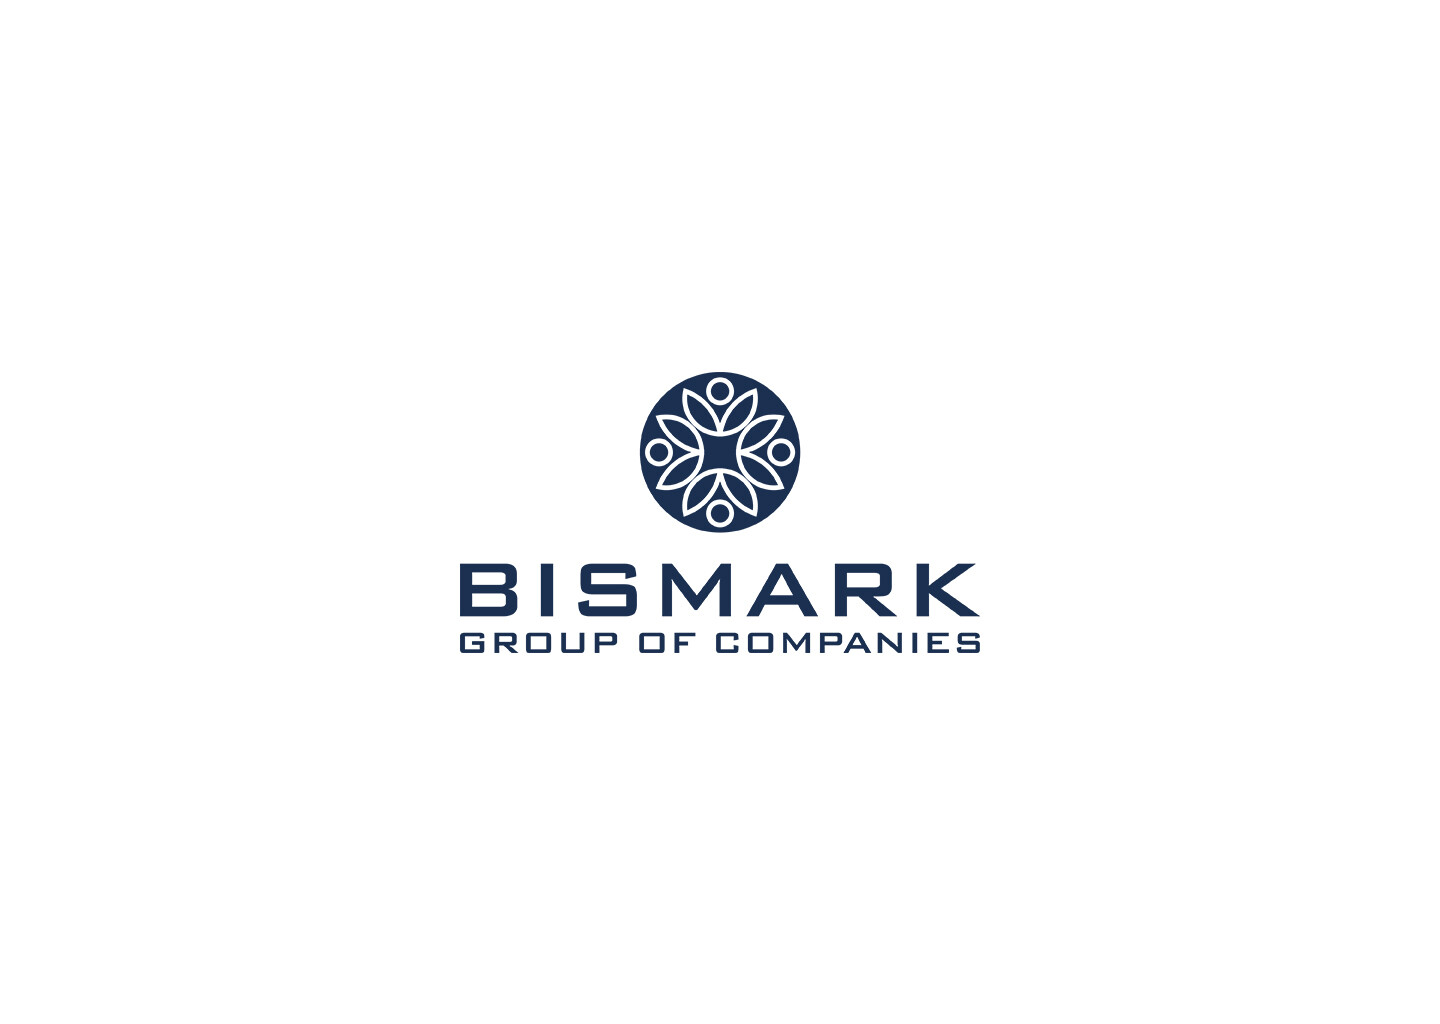 Bismark Group of Companies